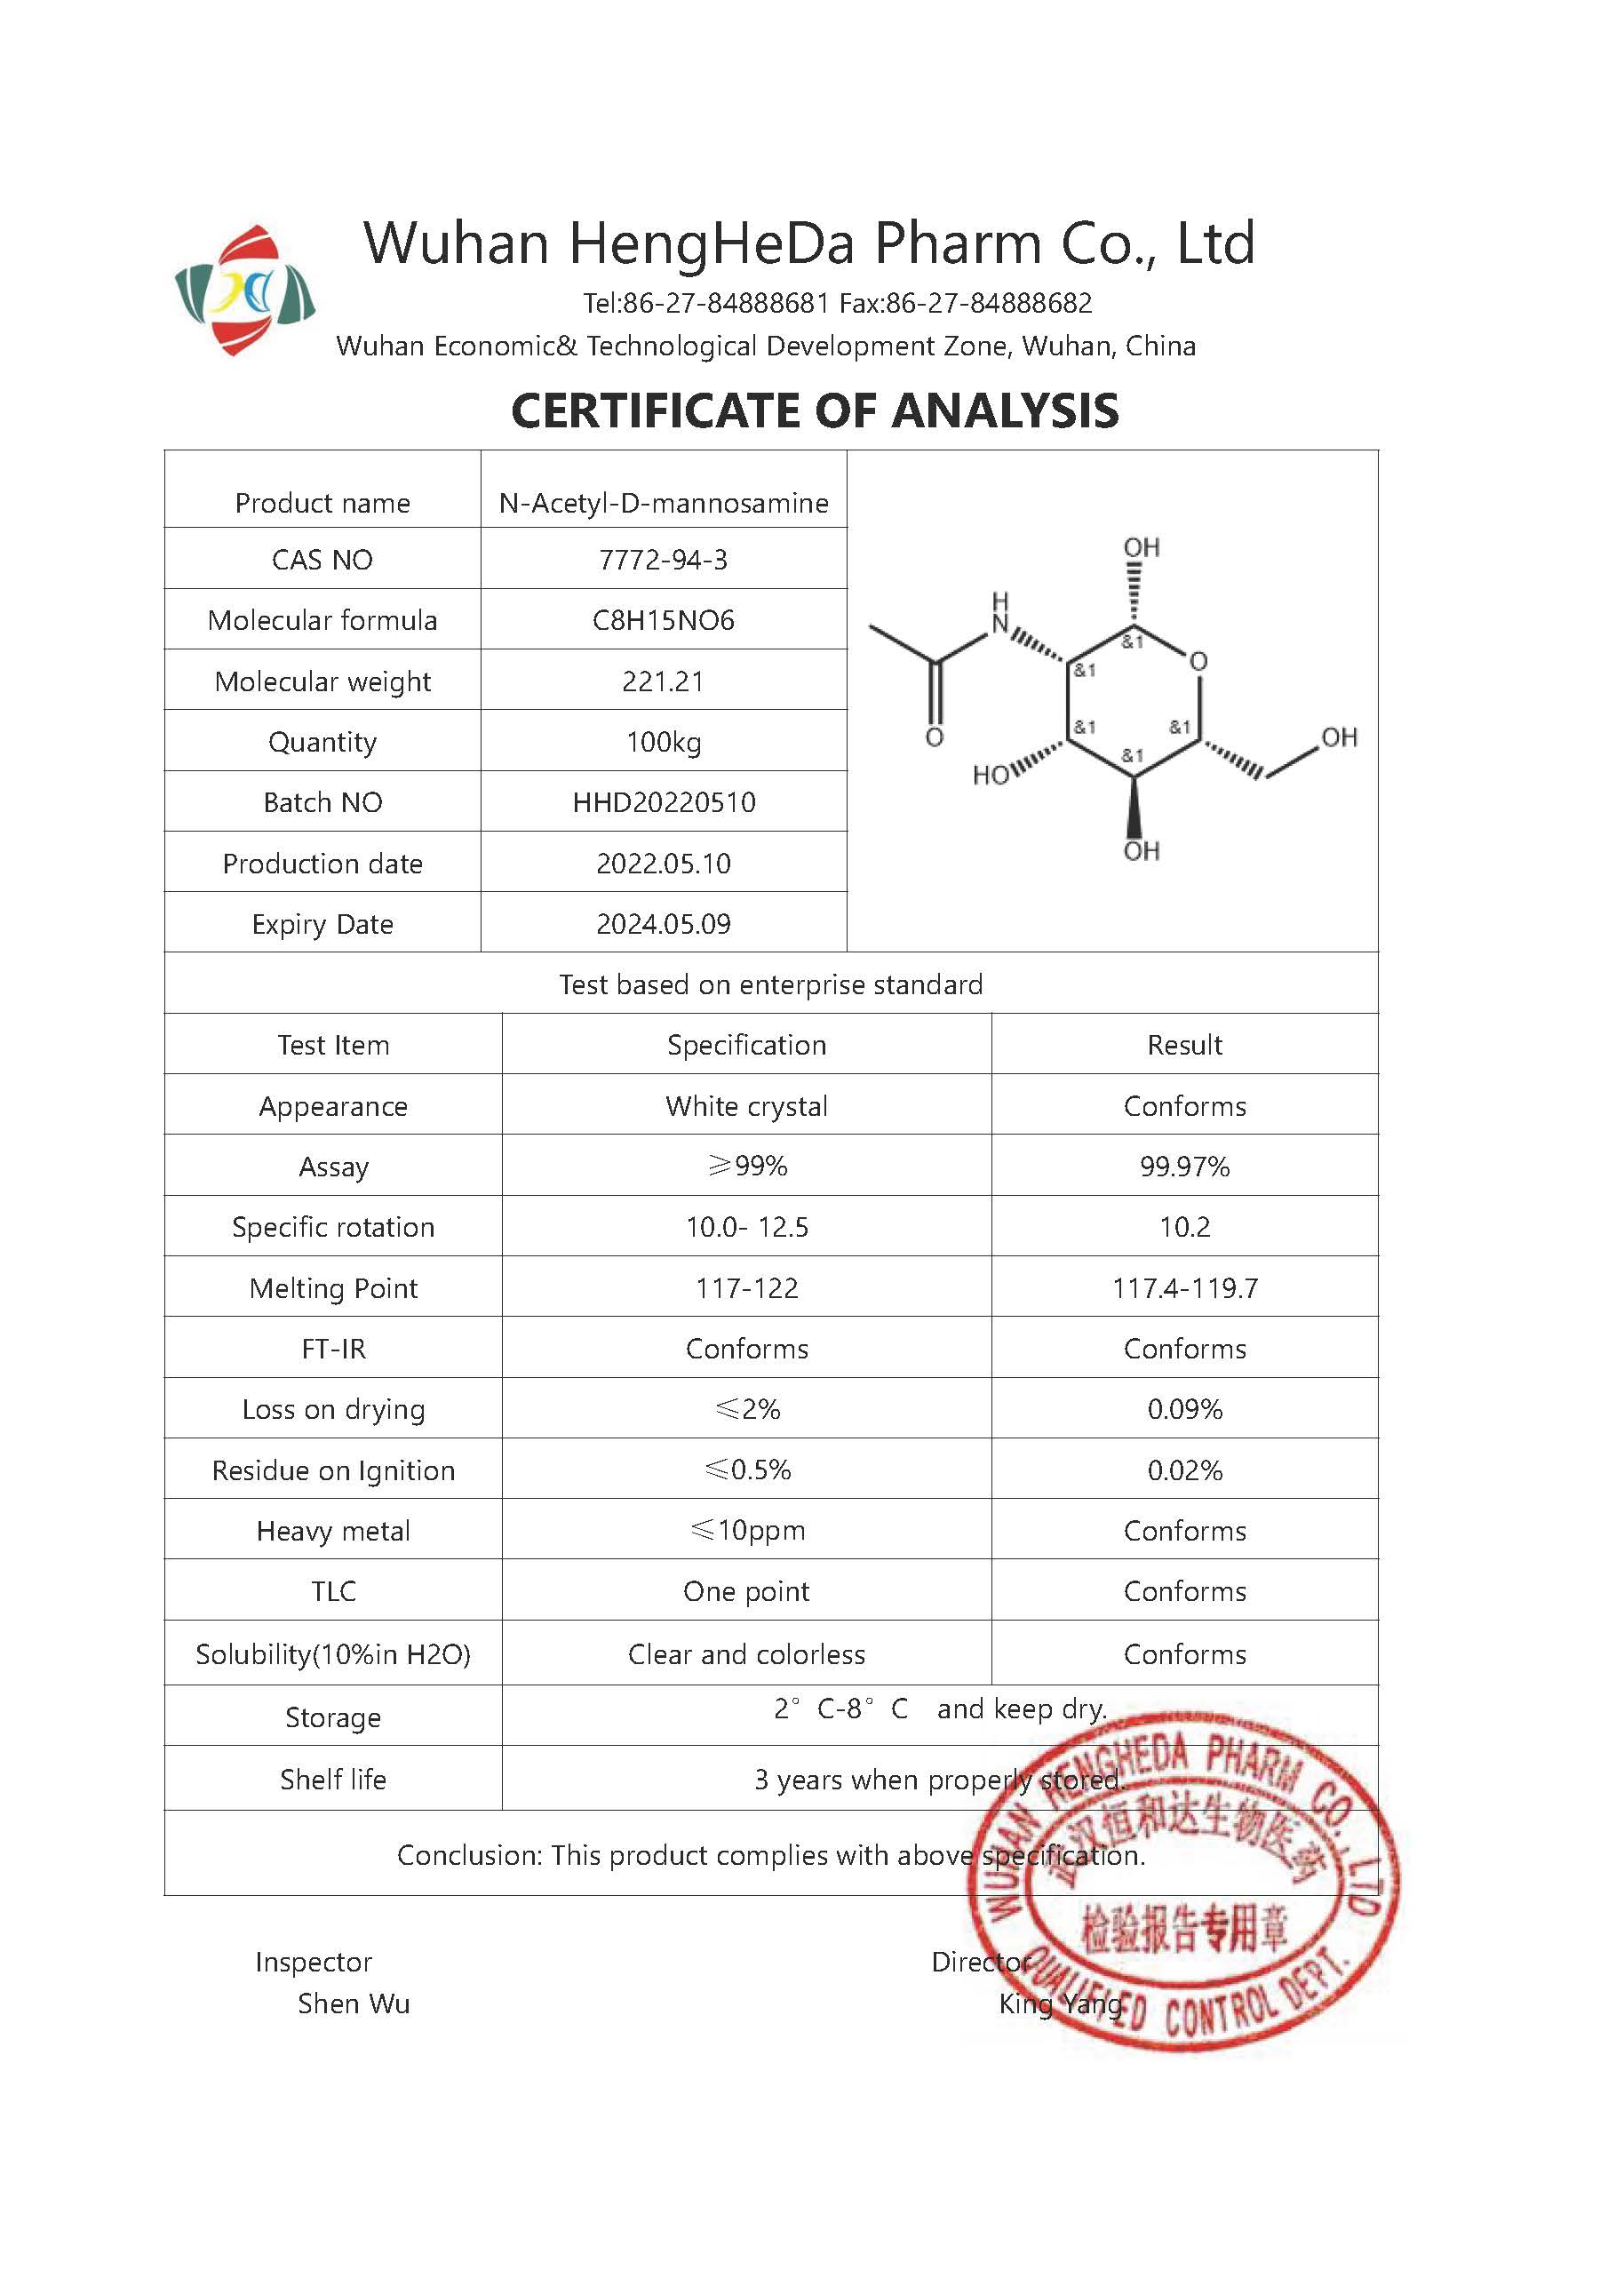 Comprar N-acetil-D-manosamina CAS 7772-94-3, N-acetil-D-manosamina CAS 7772-94-3 Precios, N-acetil-D-manosamina CAS 7772-94-3 Marcas, N-acetil-D-manosamina CAS 7772-94-3 Fabricante, N-acetil-D-manosamina CAS 7772-94-3 Citas, N-acetil-D-manosamina CAS 7772-94-3 Empresa.